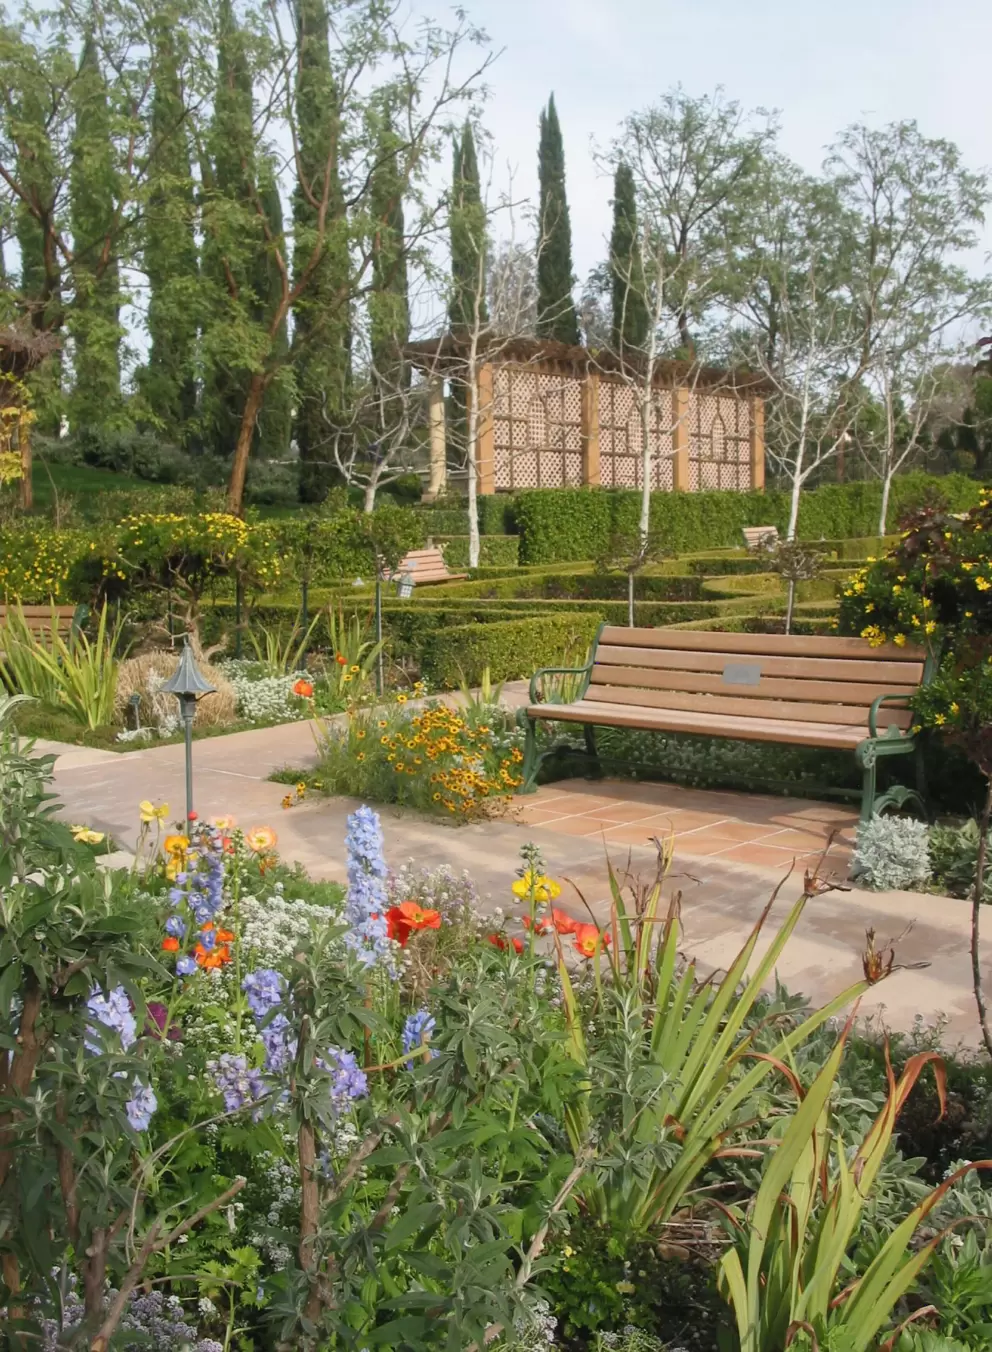 Gardens of the World, Thousand Oaks